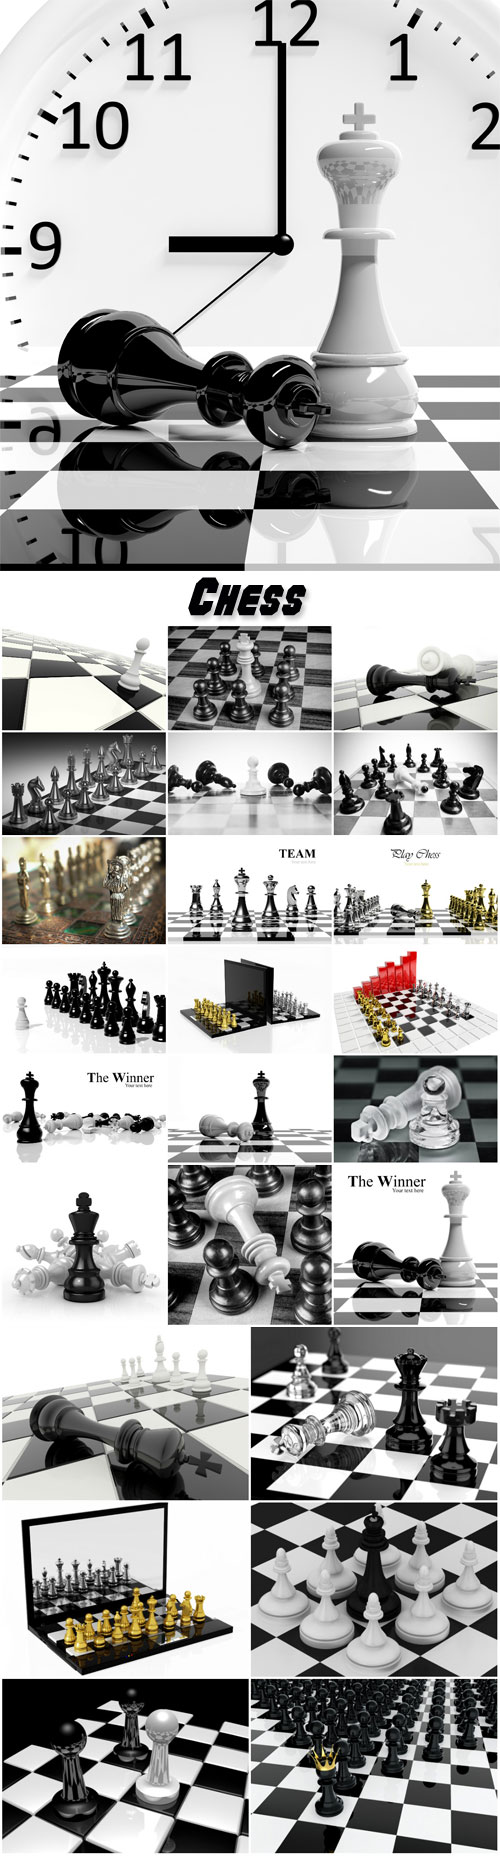 Chess, Chess Board